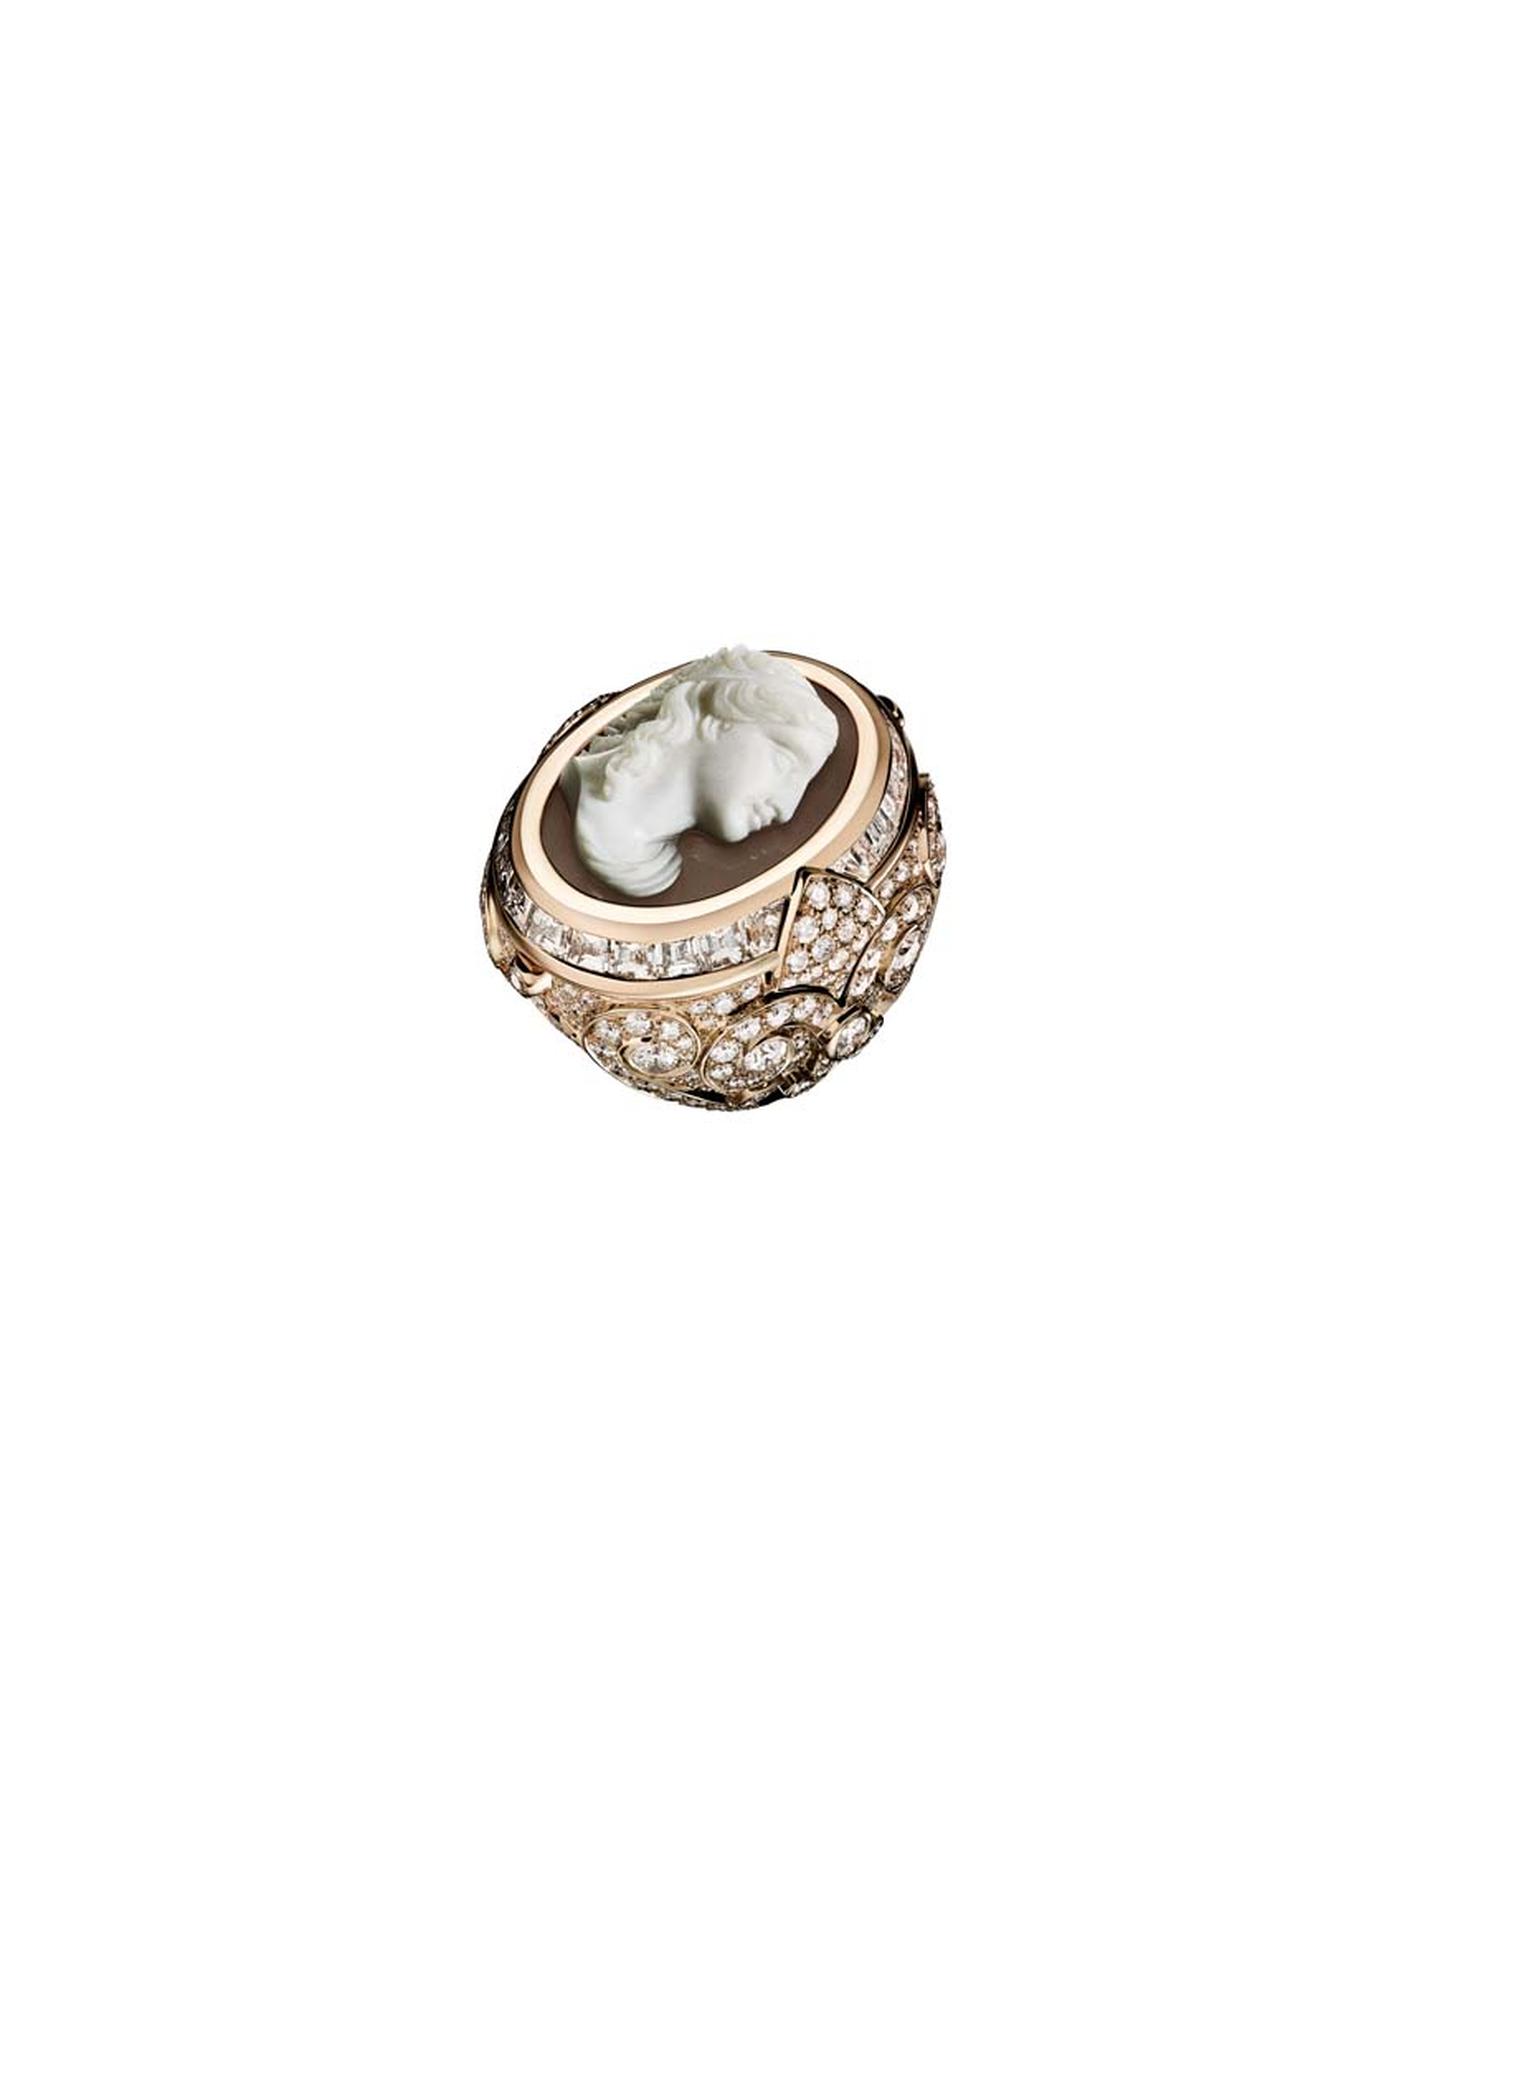 Giampiero Bodino cameo-style ring with diamonds. Image: Laziz Hamani.